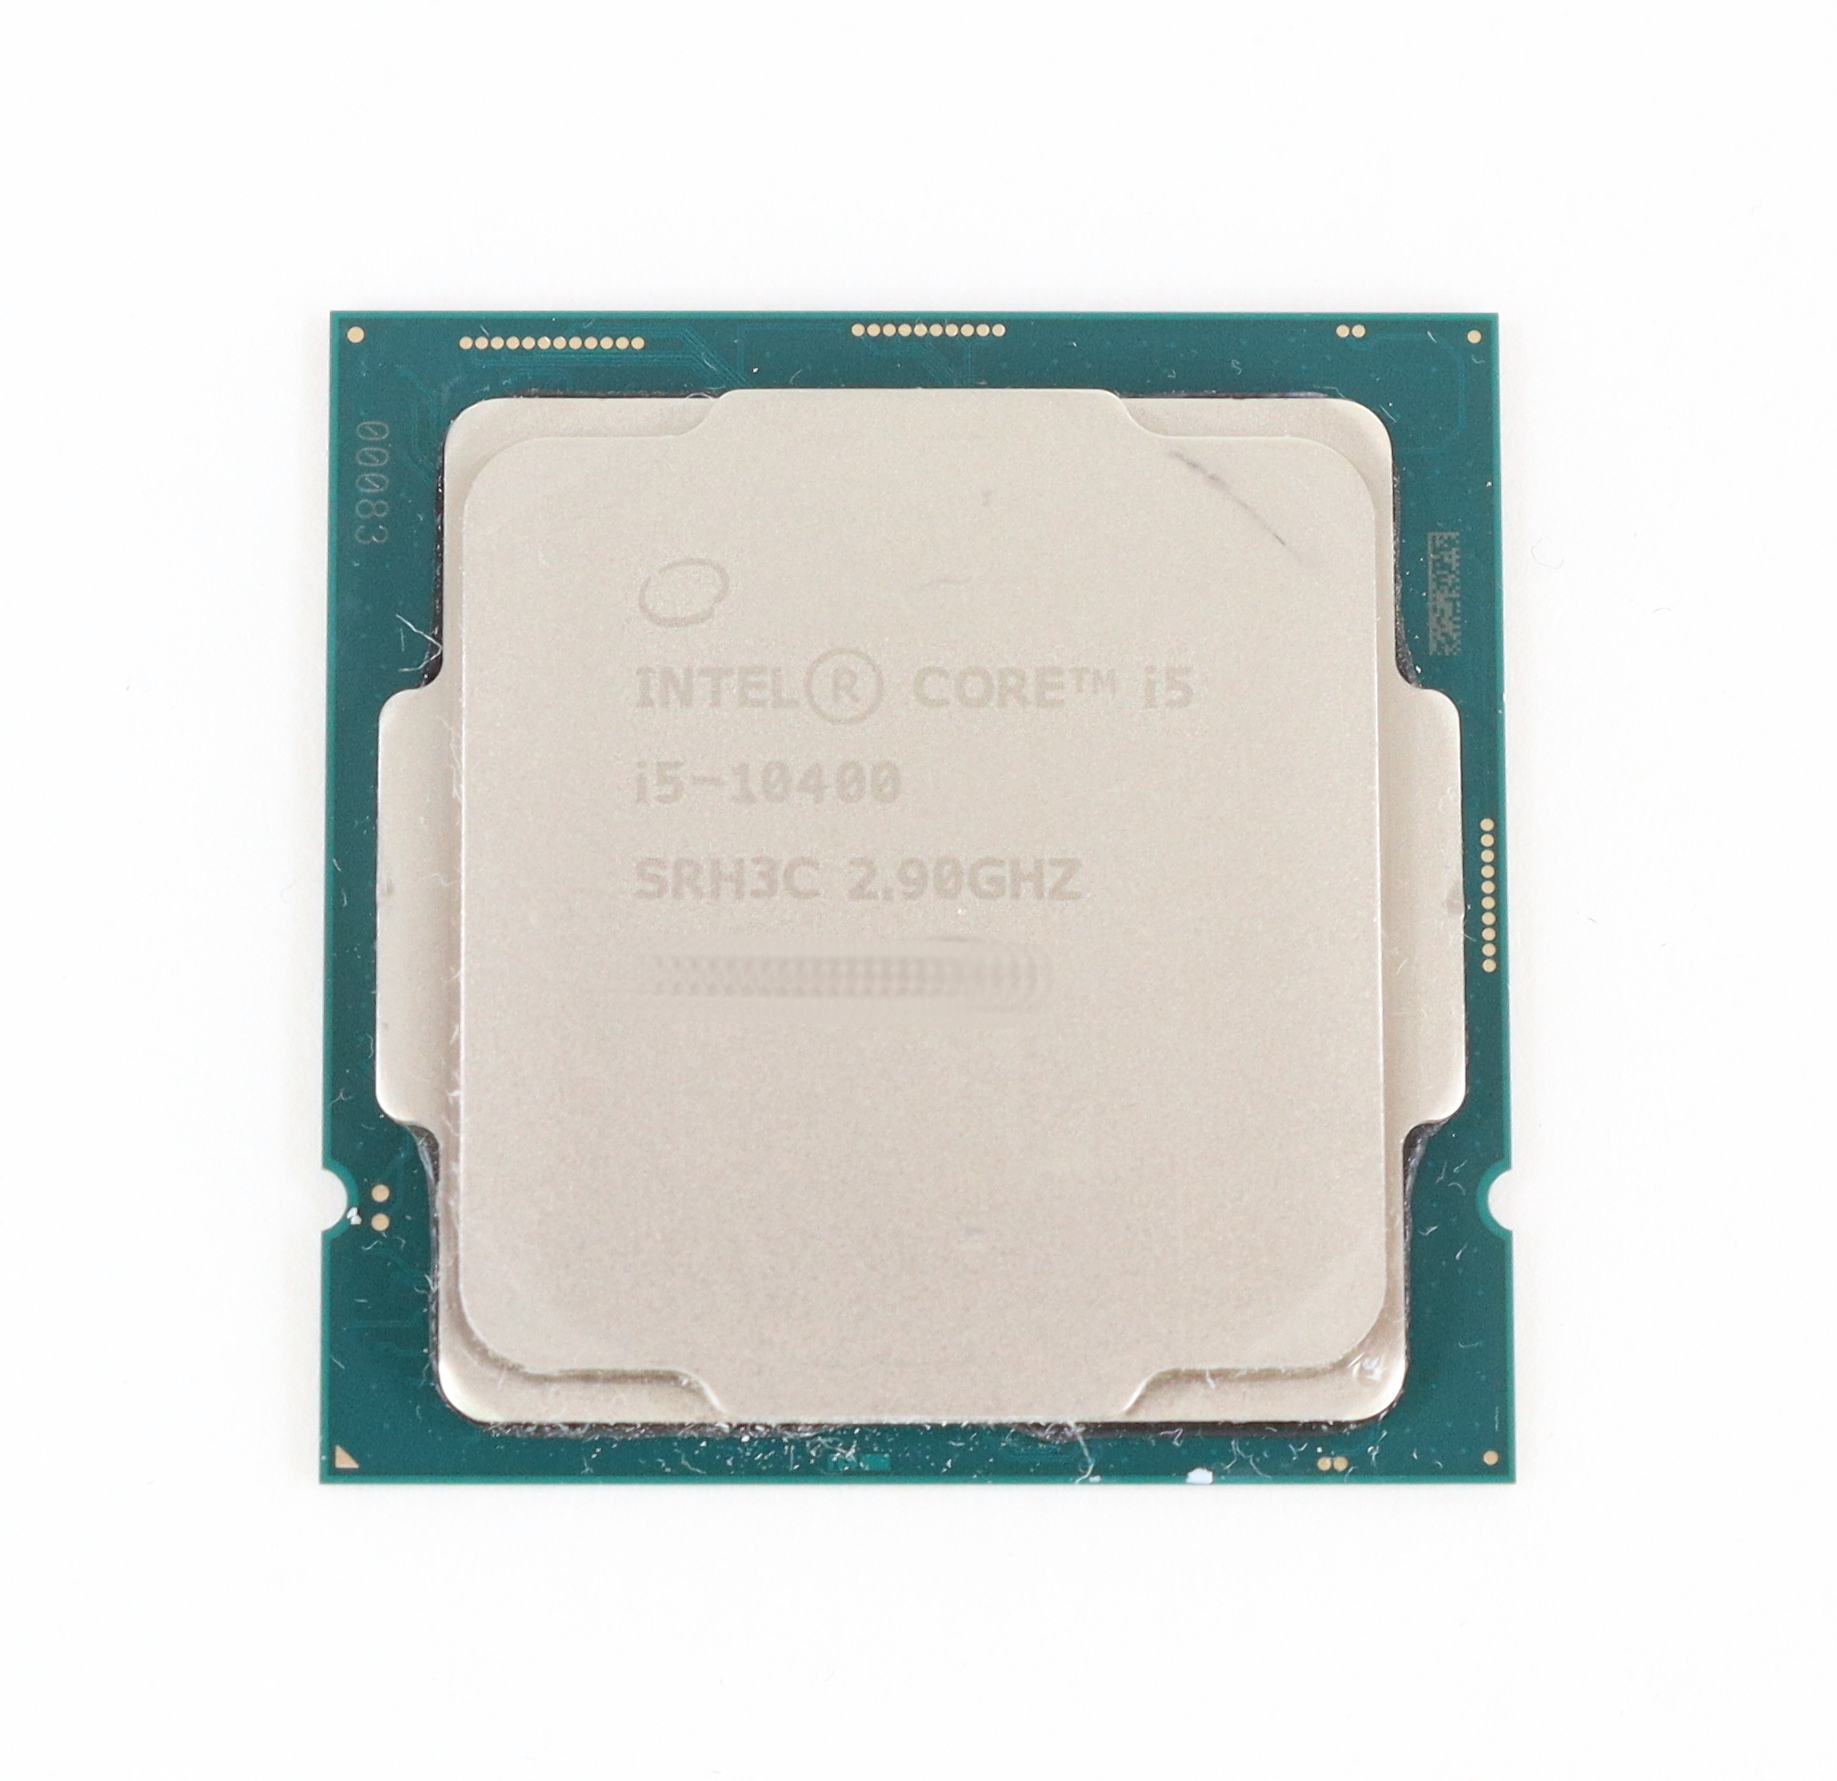 Intel Core i5-10400F, Processeur 2.9 GHz 6 Cœurs 12 Threads CPU Socket  LGA1200 735858445948